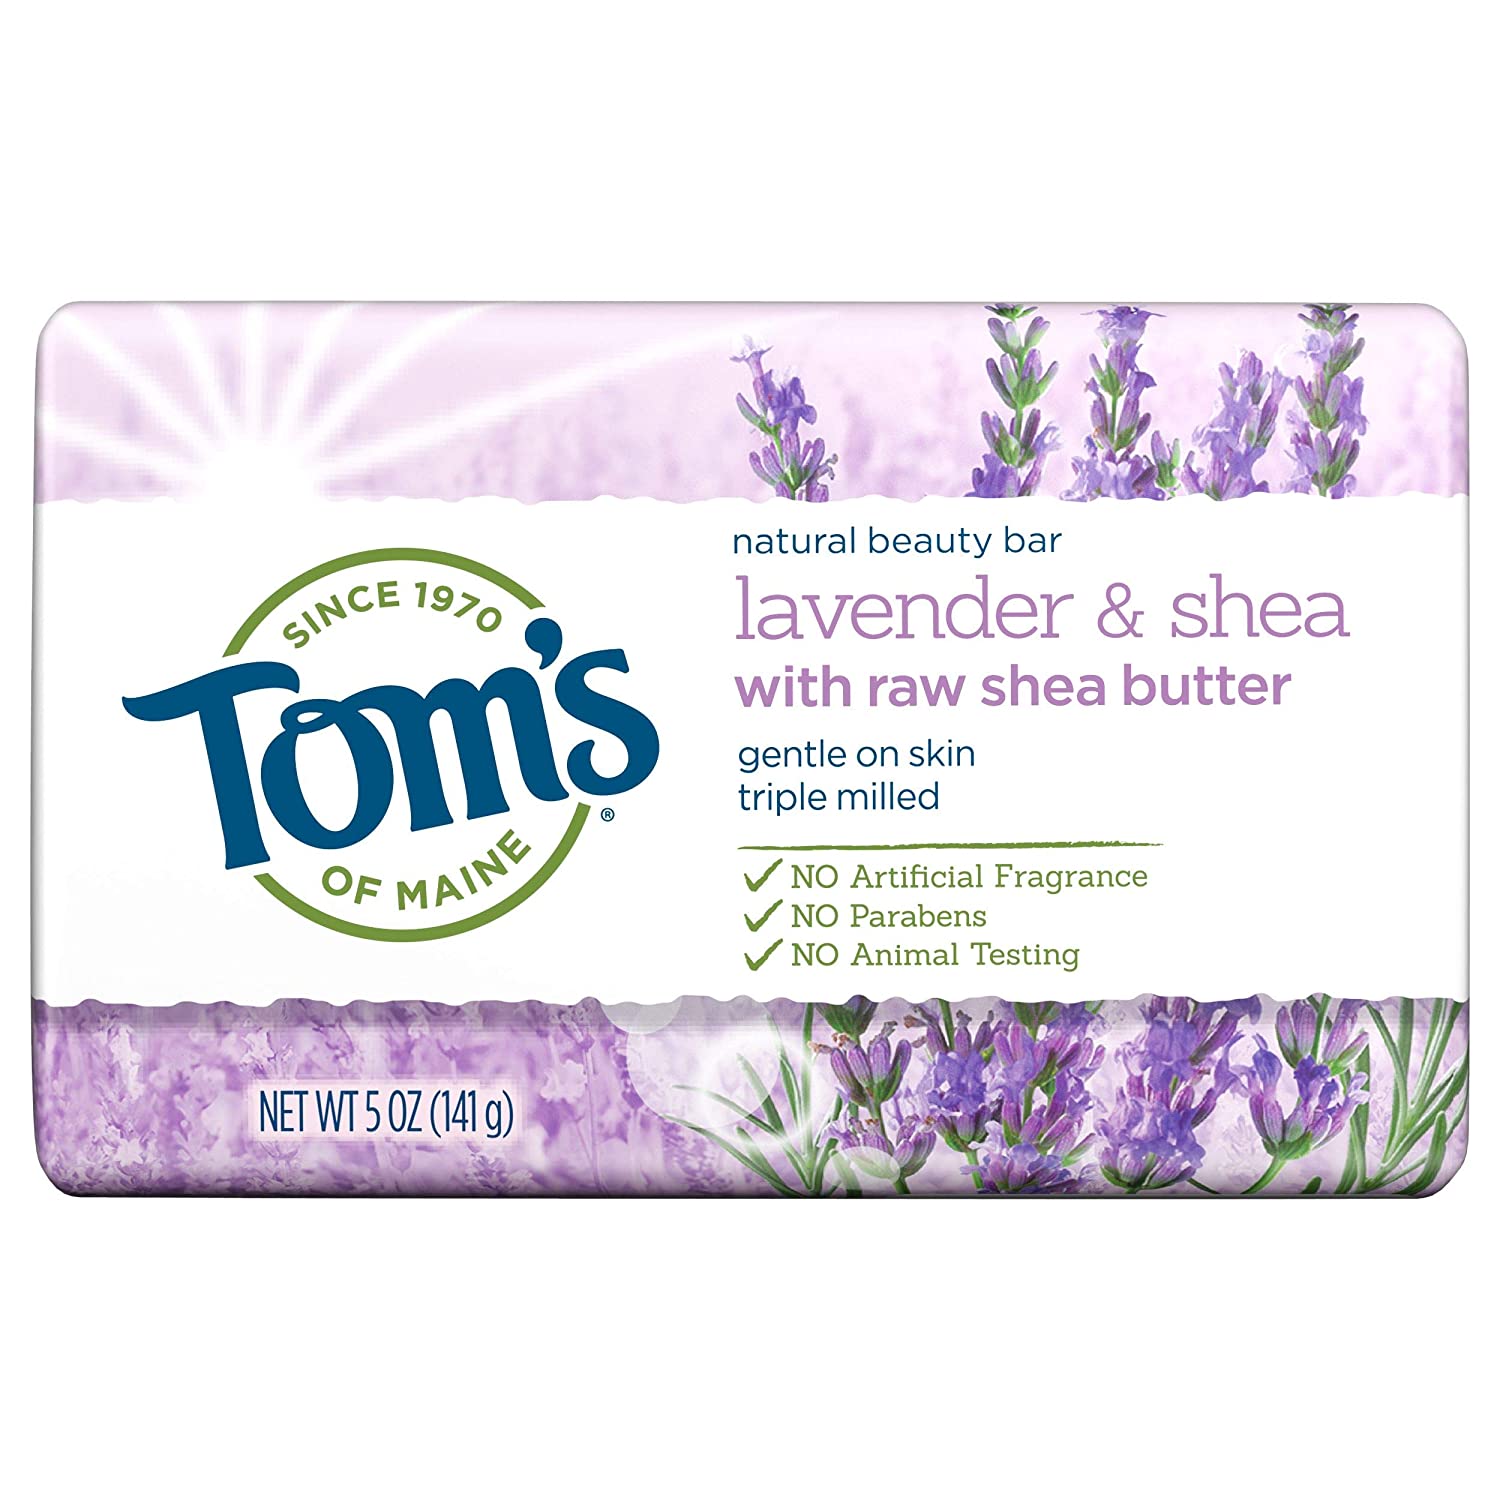 Tom's bar soap helps fight Coronavirus and flu.